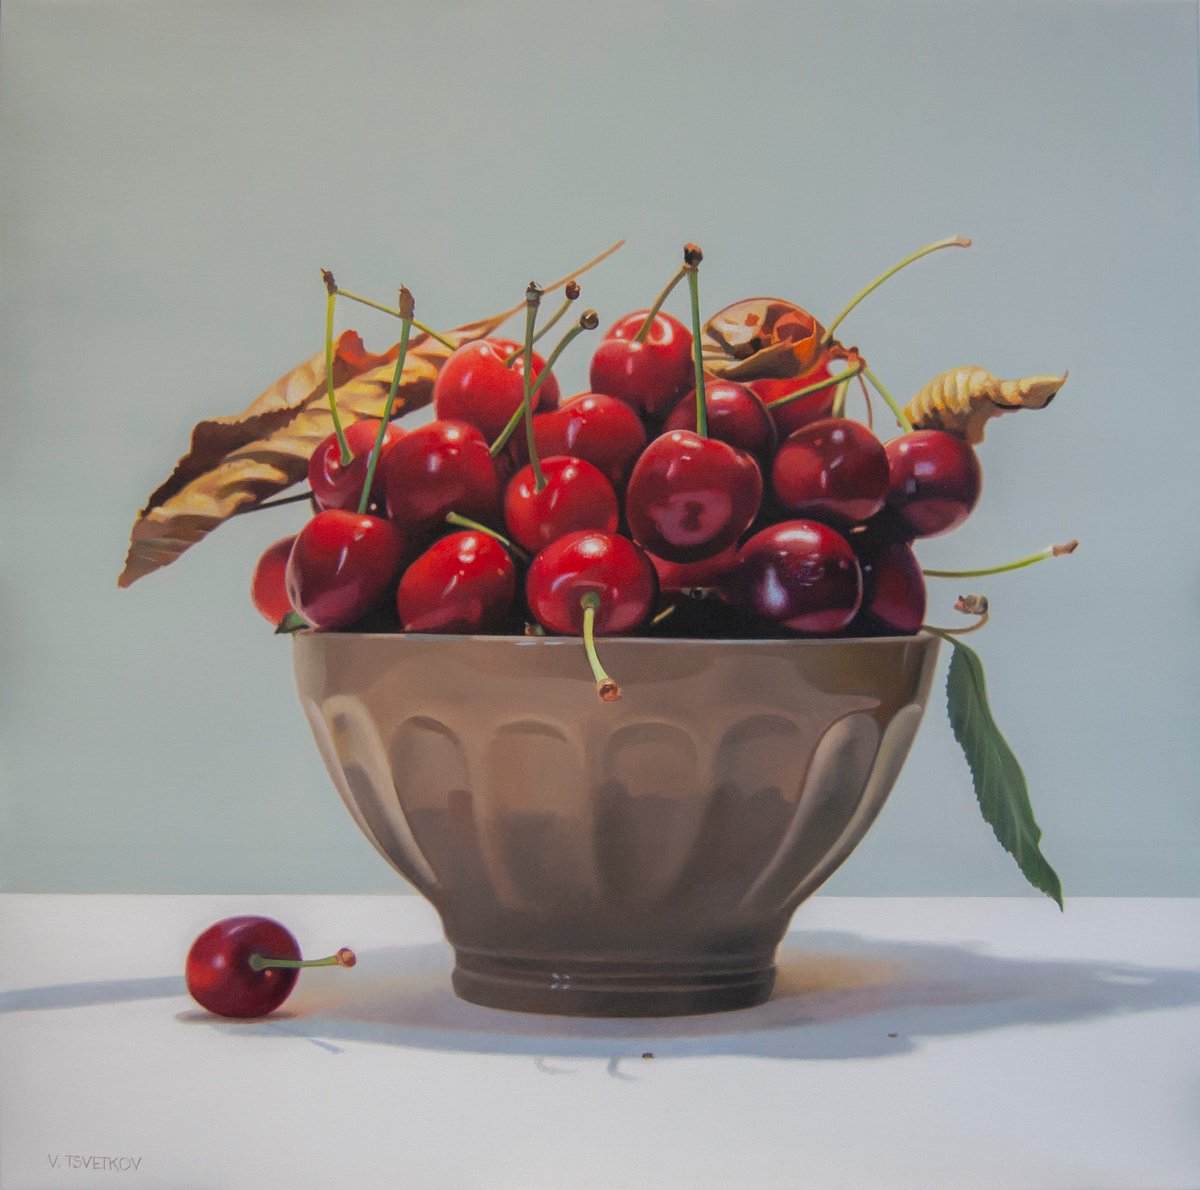 Cherries, Original oil on canvas painting by Valeri Tsvetkov